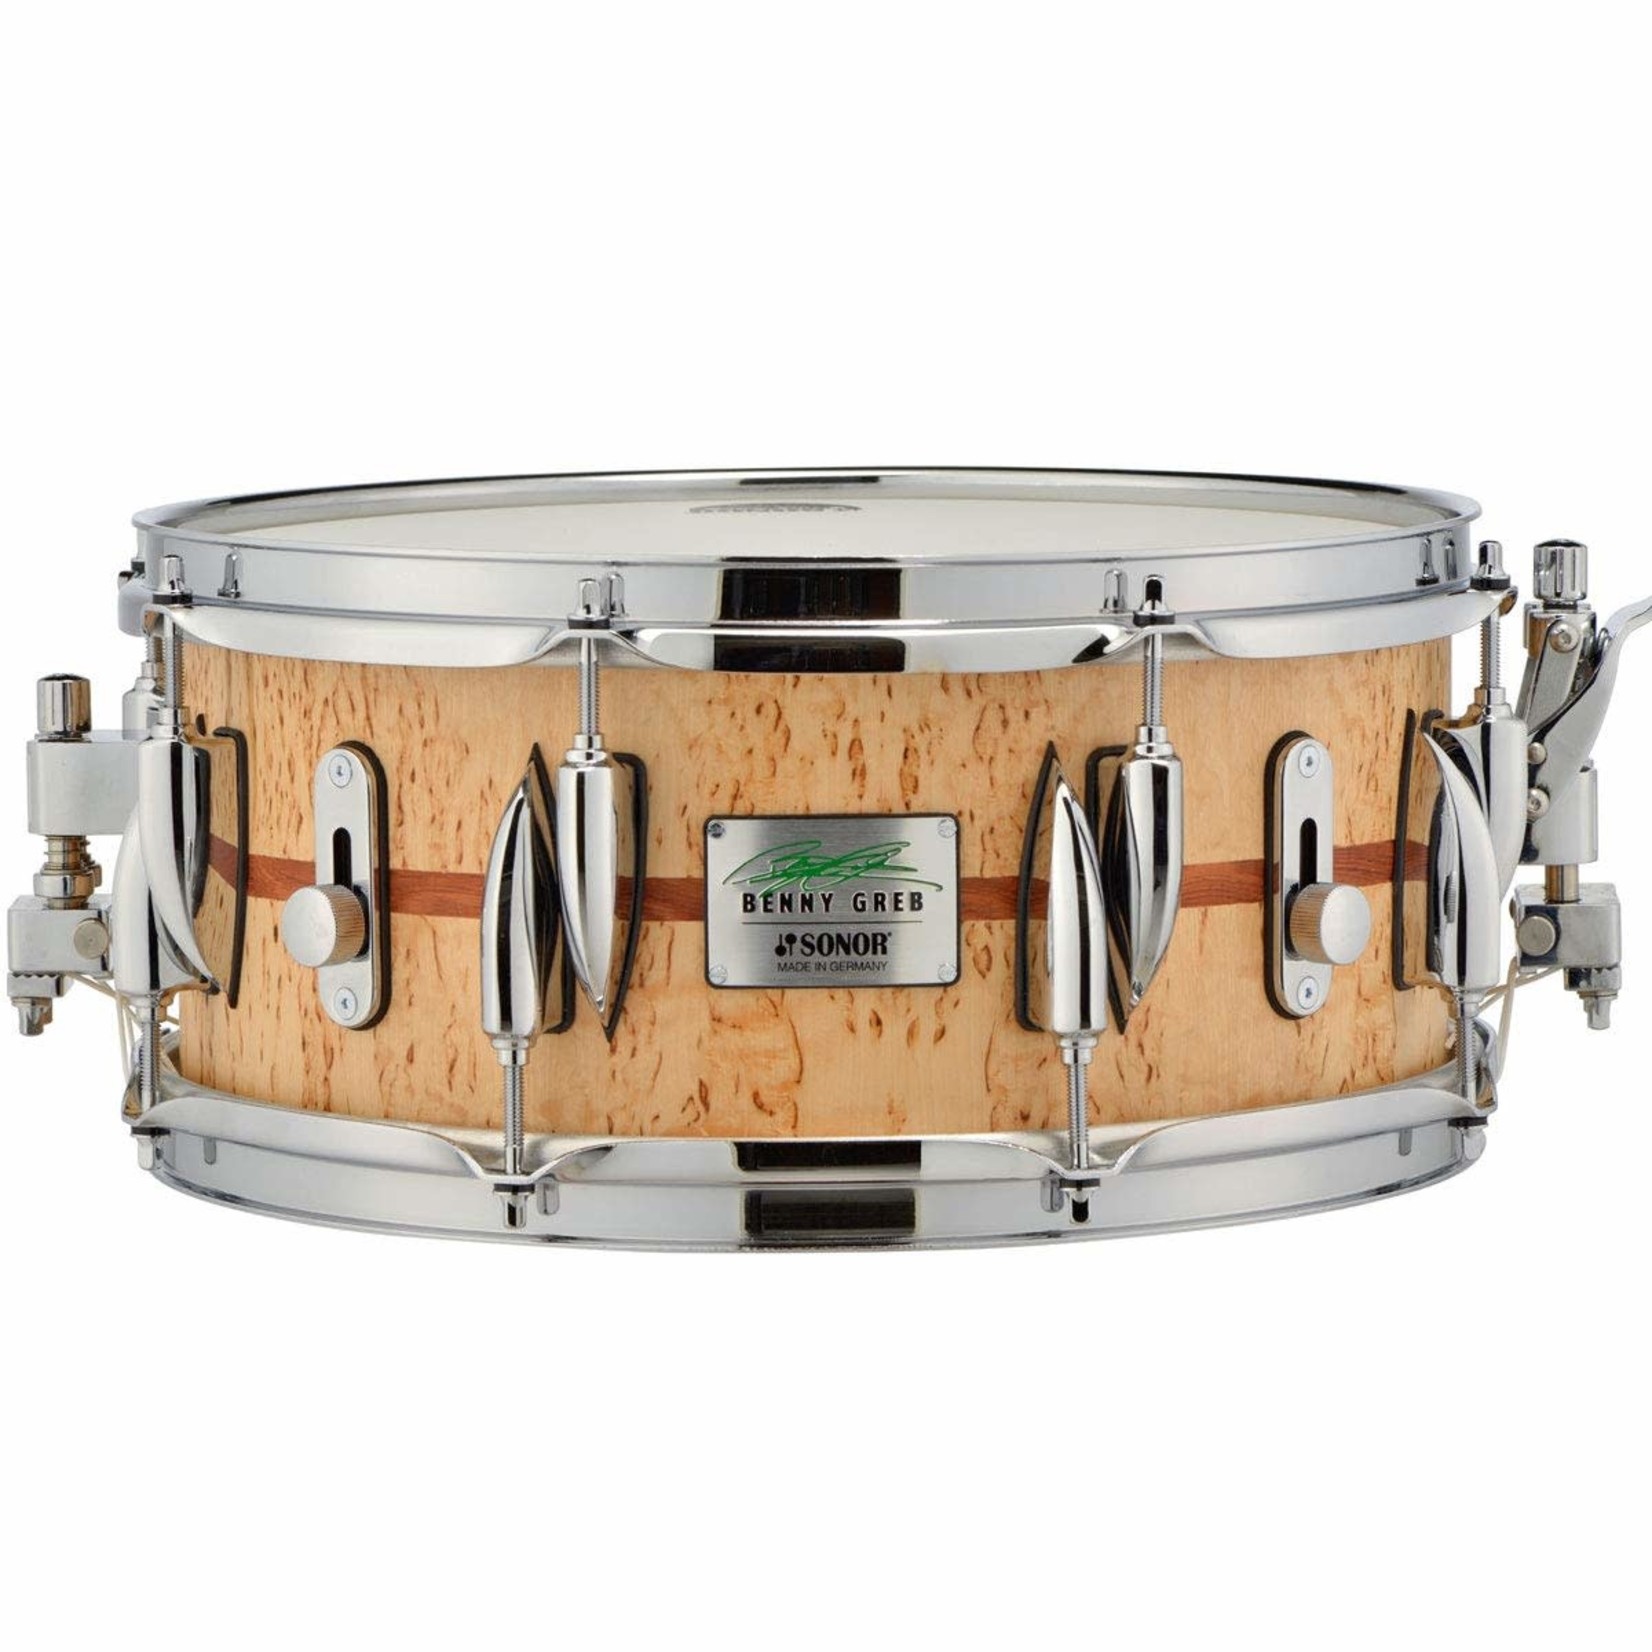 Sonor Sonor 5.75x13" Benny Greb 2.0 Signature Beech Snare Drum